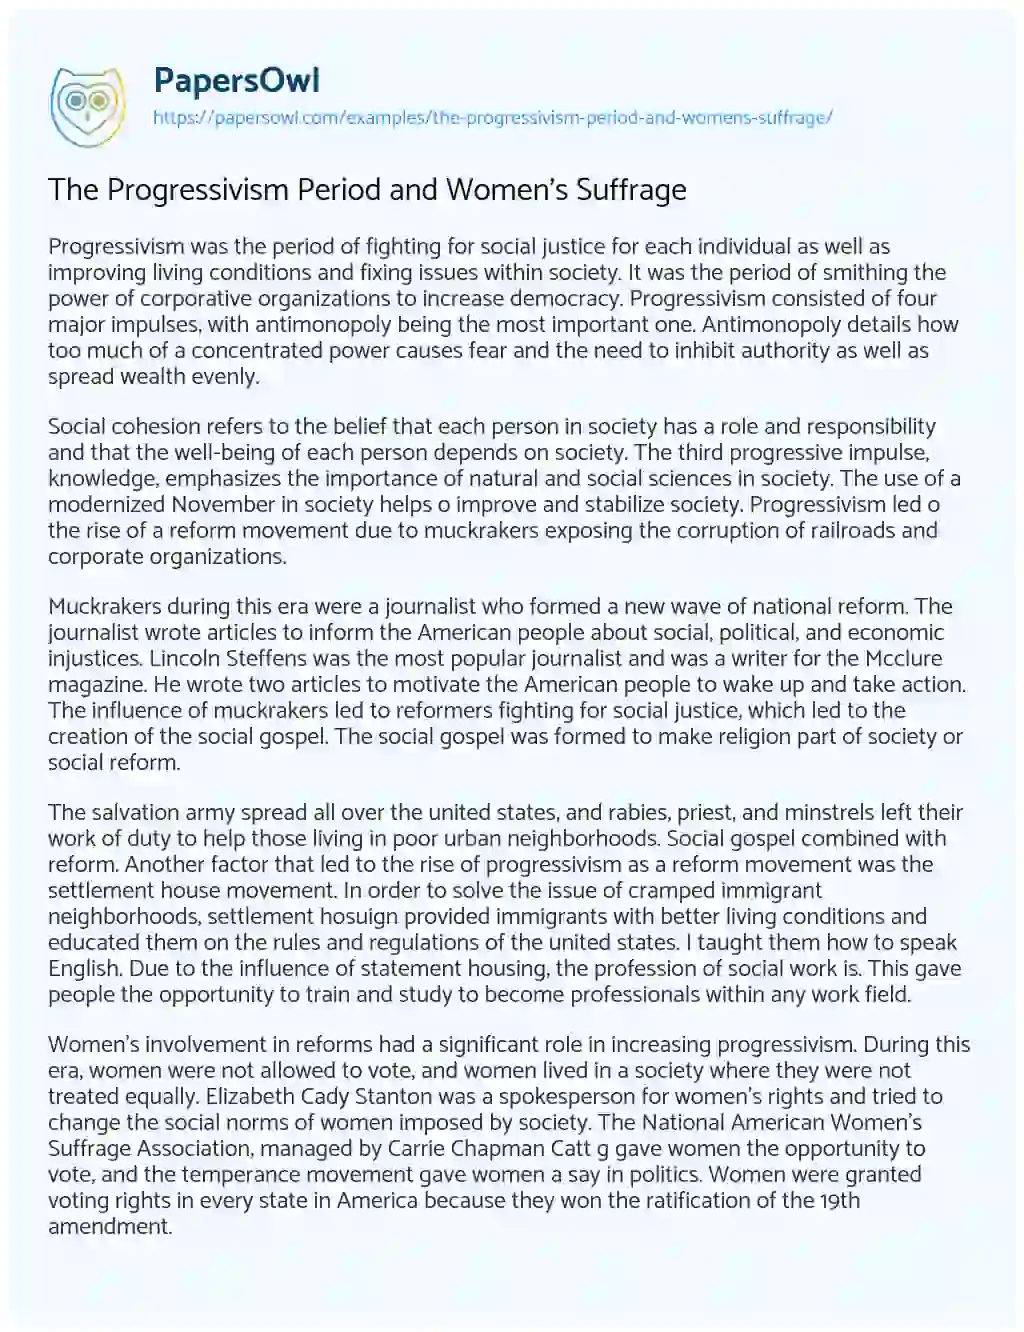 Essay on The Progressivism Period and Women’s Suffrage